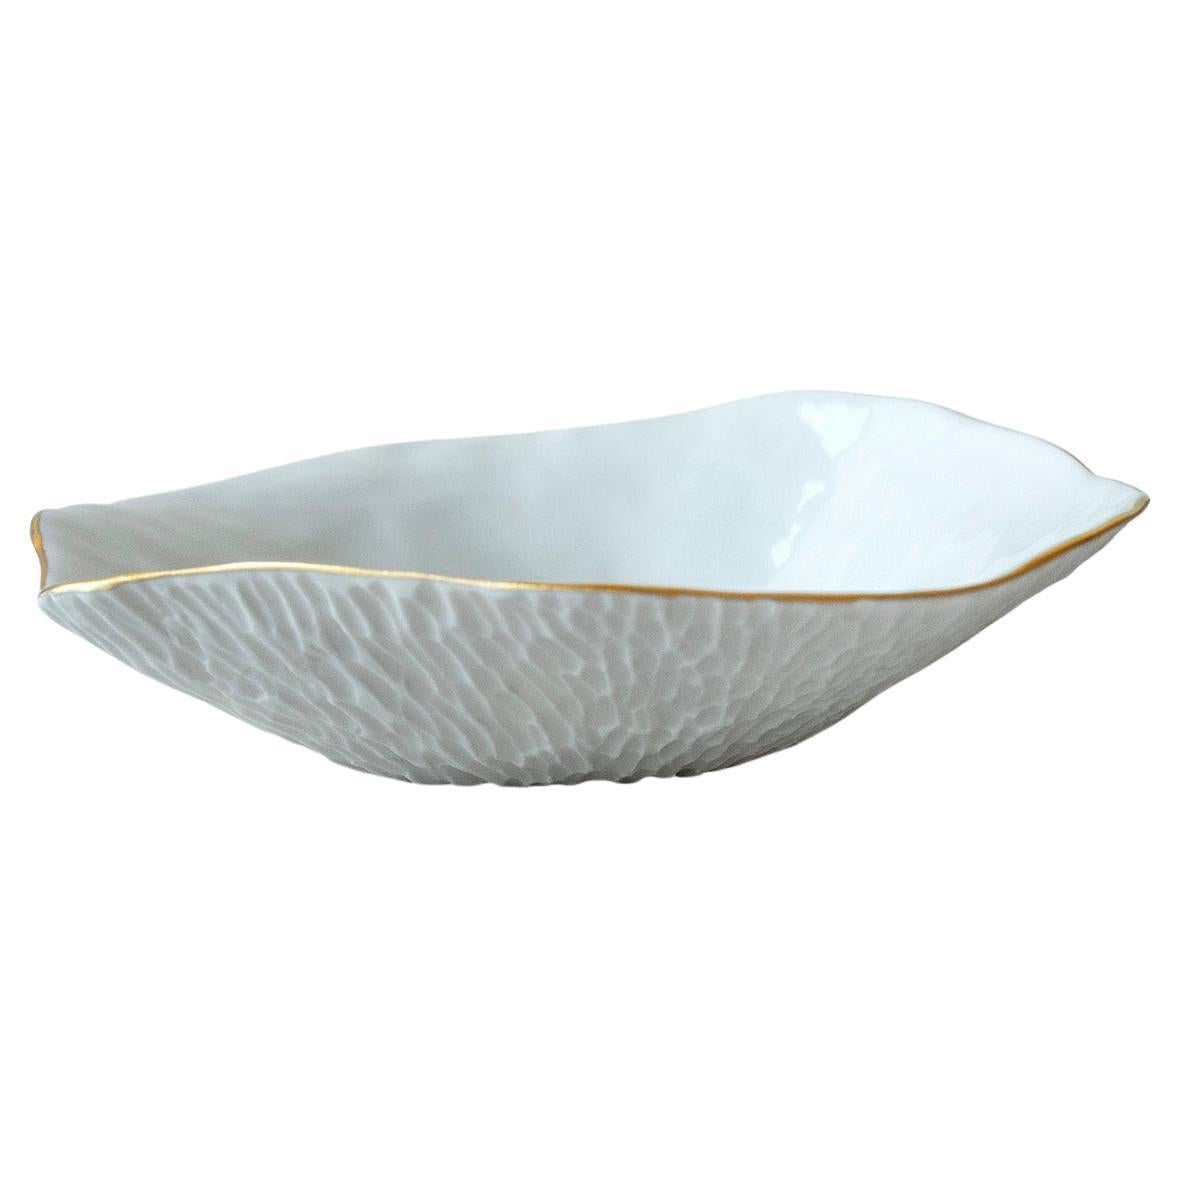 Indulge Nº9 / Golden Rim / Small Plate, Handmade Porcelain Tableware